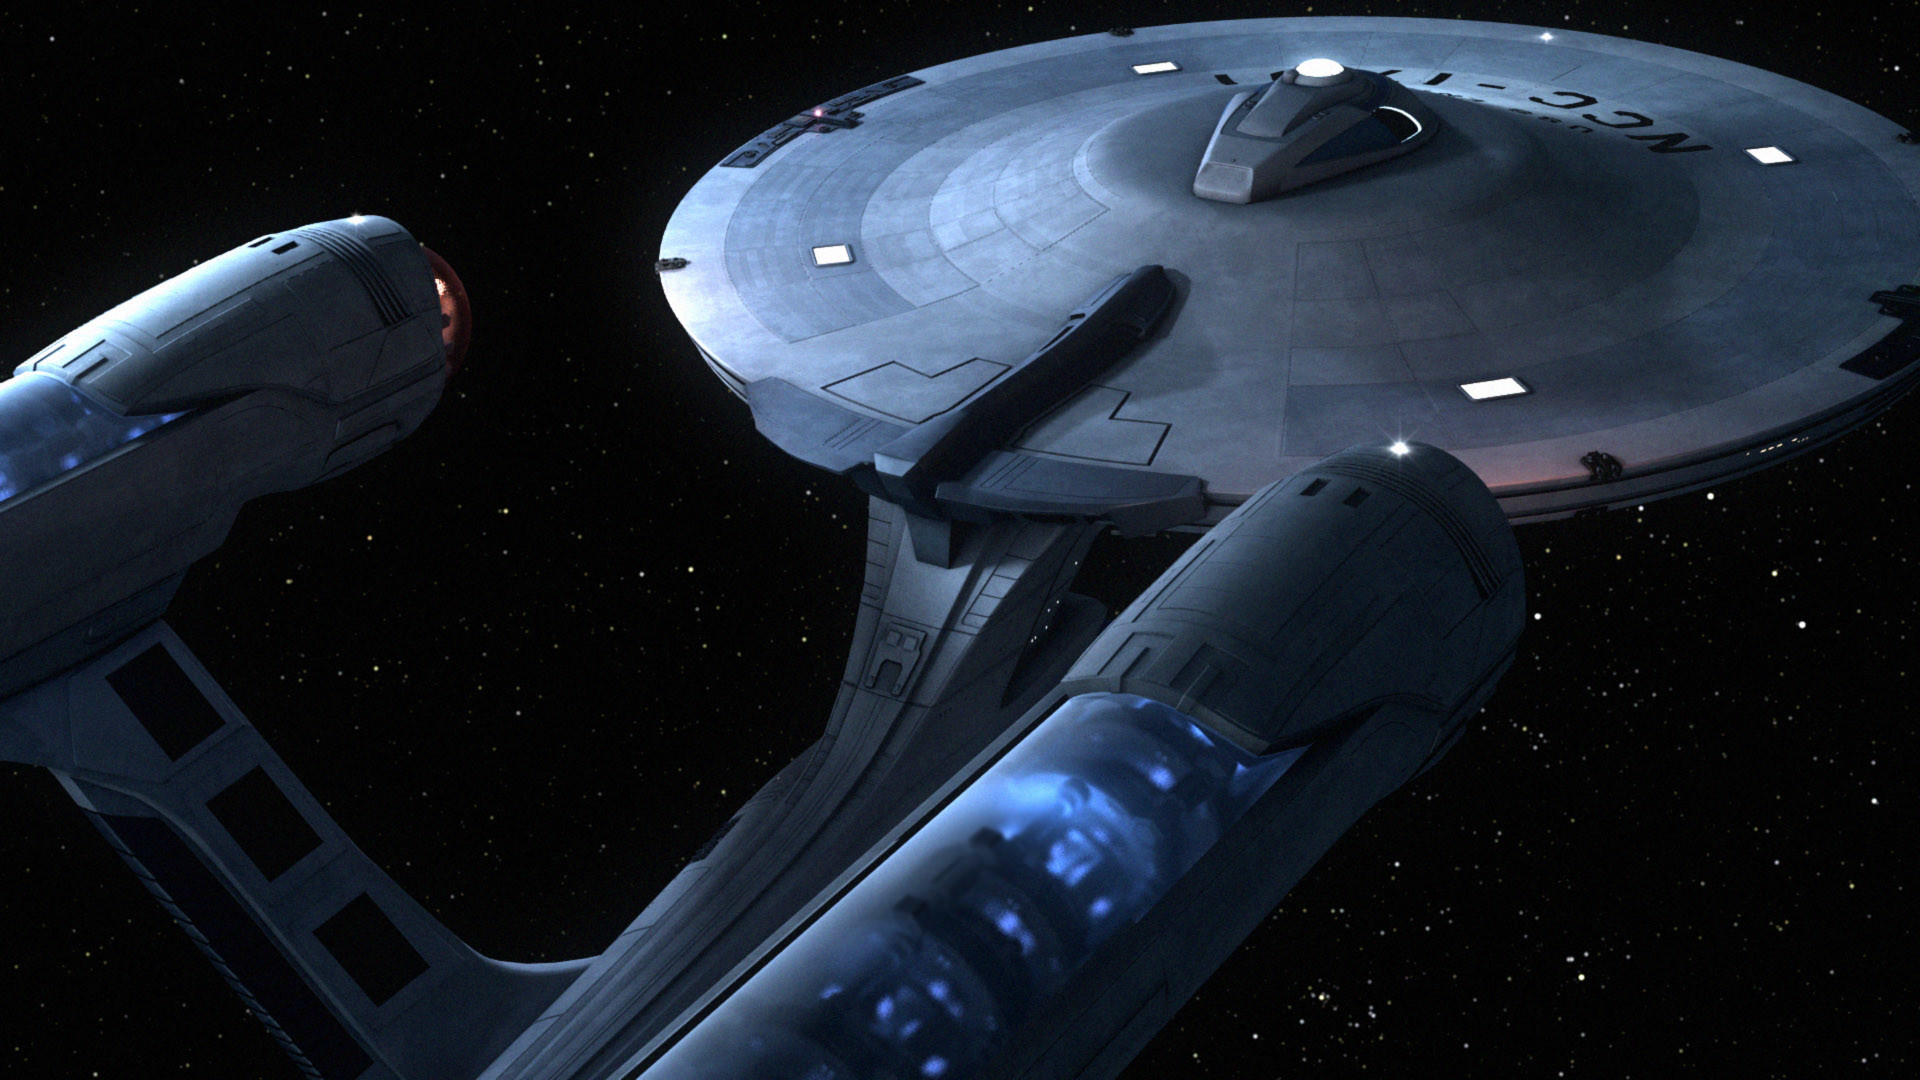 Star trek uss enterprise spaceships wallpaper – – High